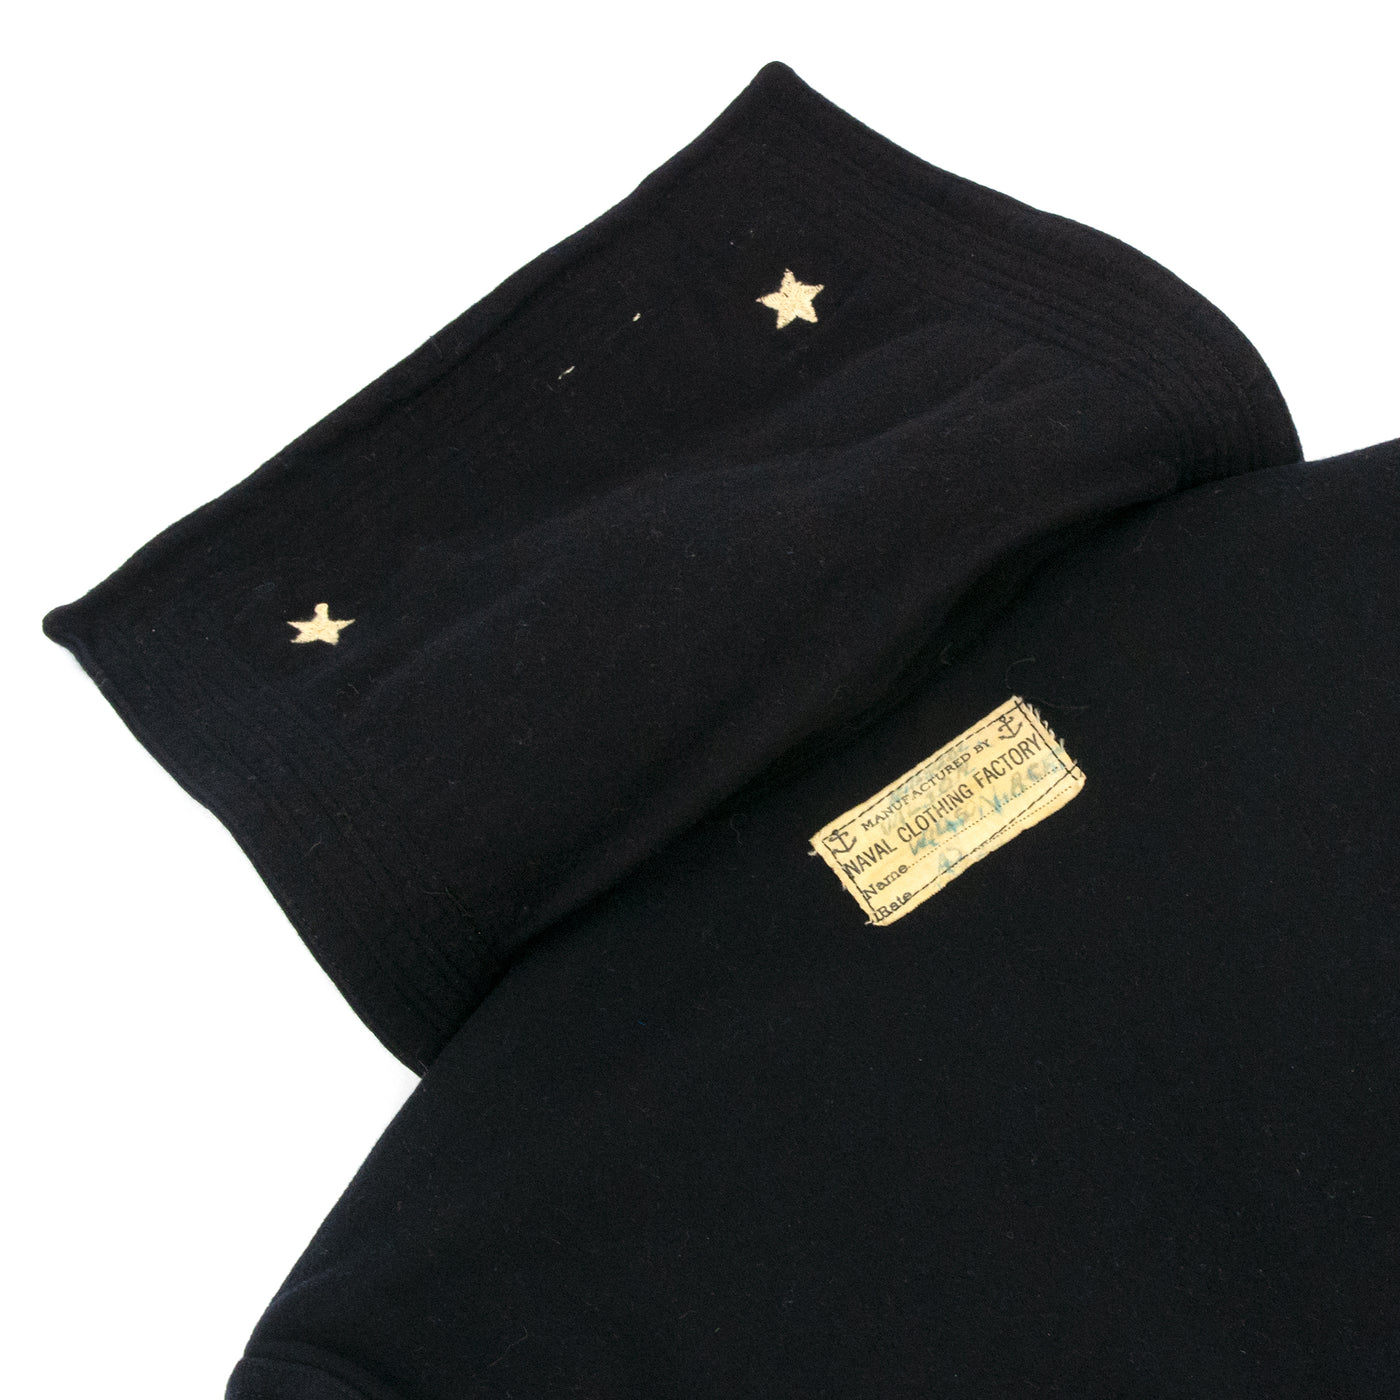 Vintage 1940s WW2 Era US Navy Cracker Jack Military Wool Shirt - XS Tag